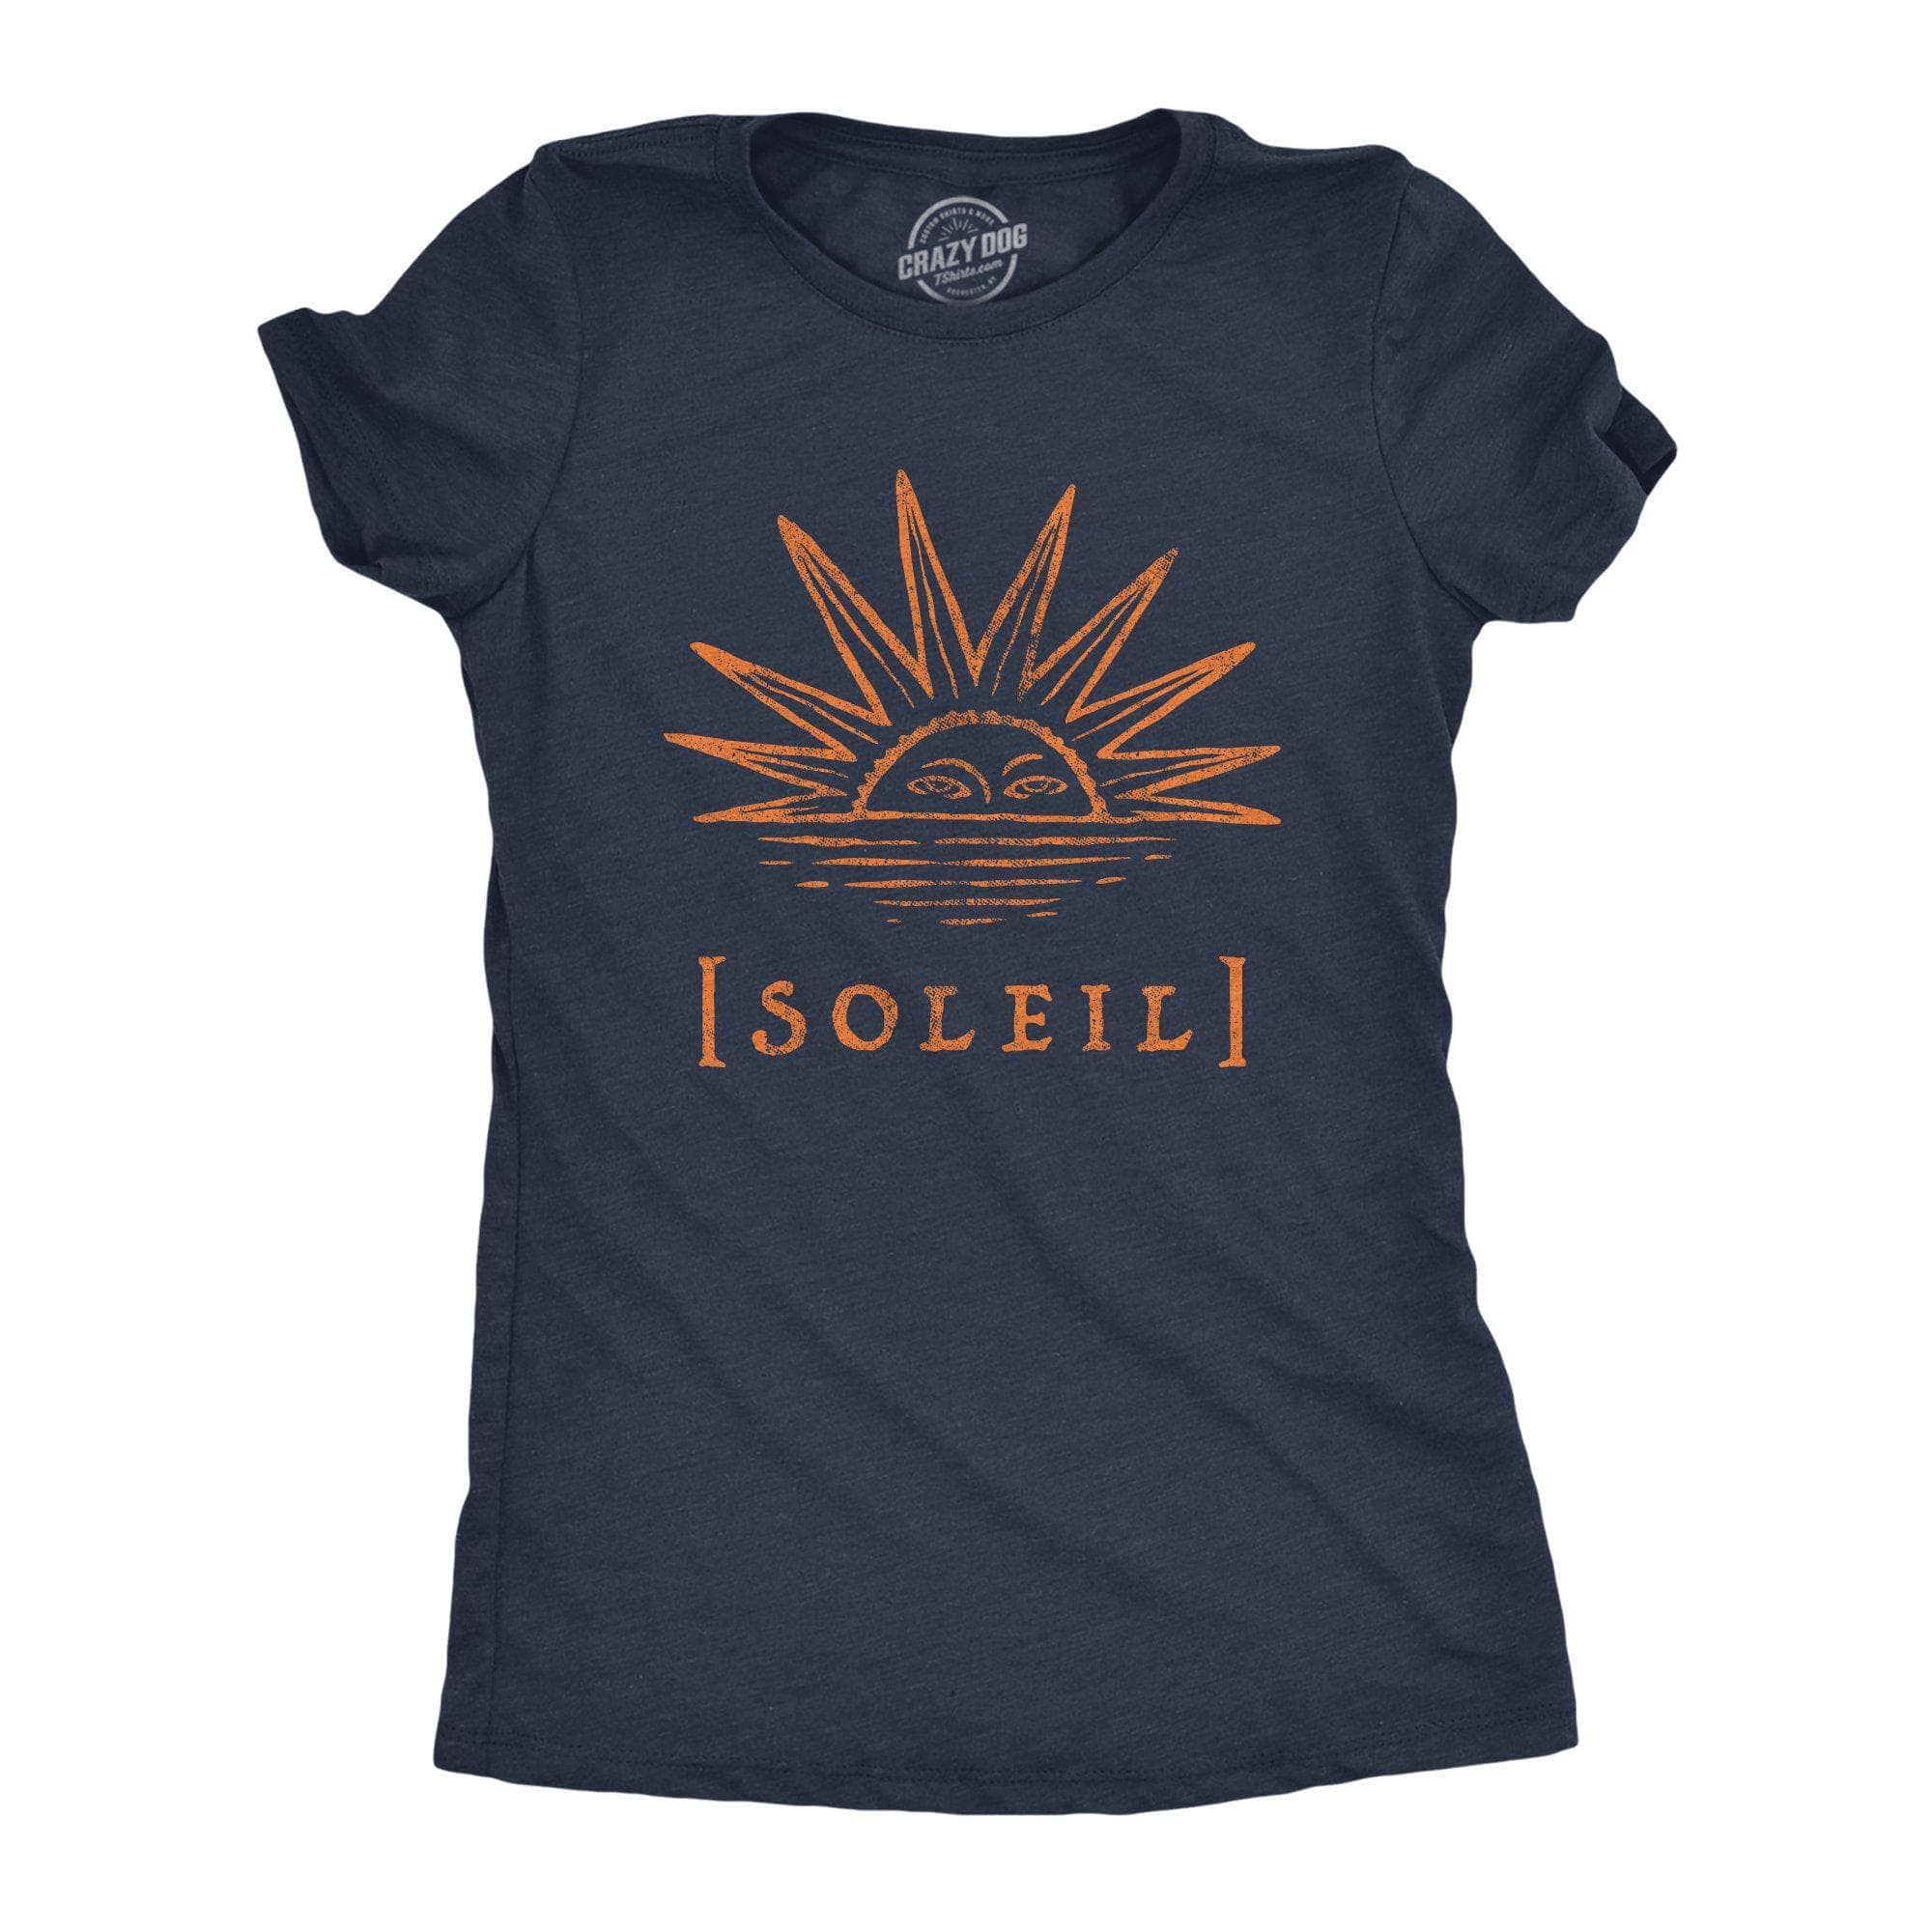 Soleil Women's Tshirt - Crazy Dog T-Shirts